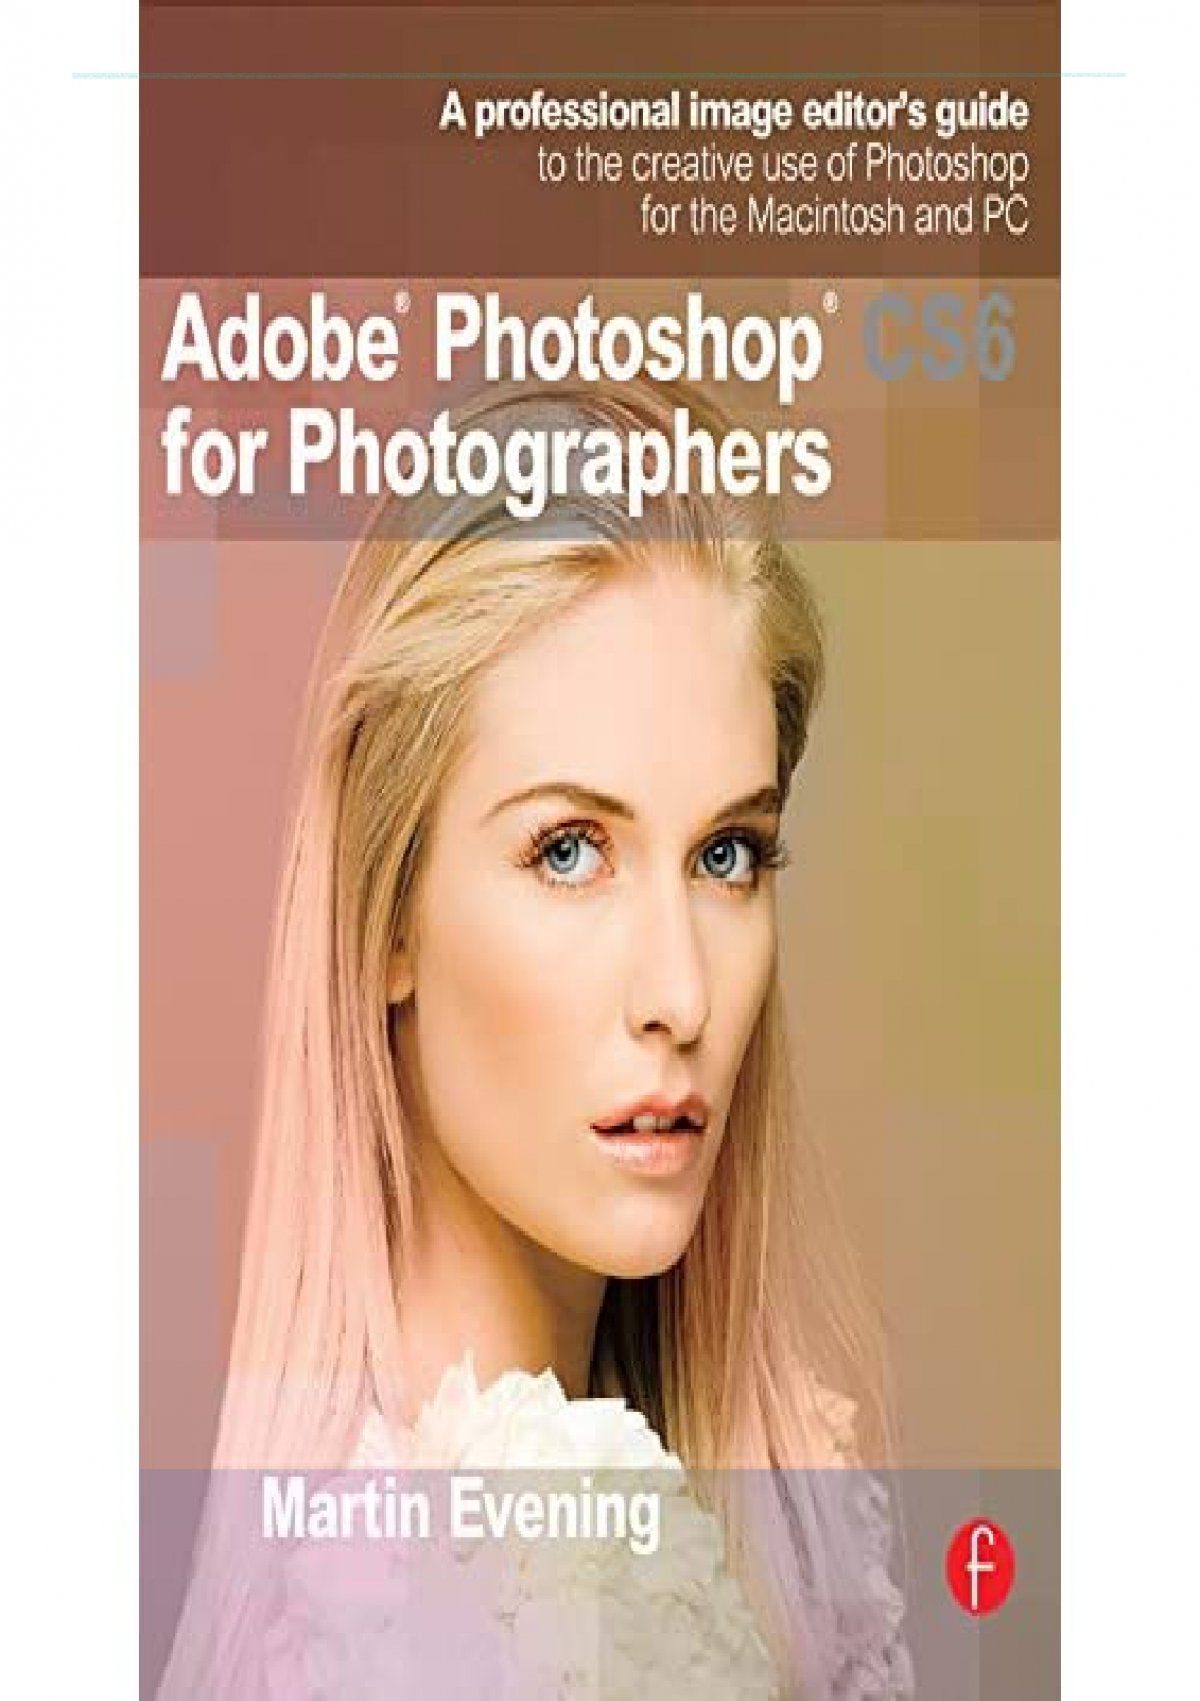 adobe photoshop cs6 for photographers pdf download